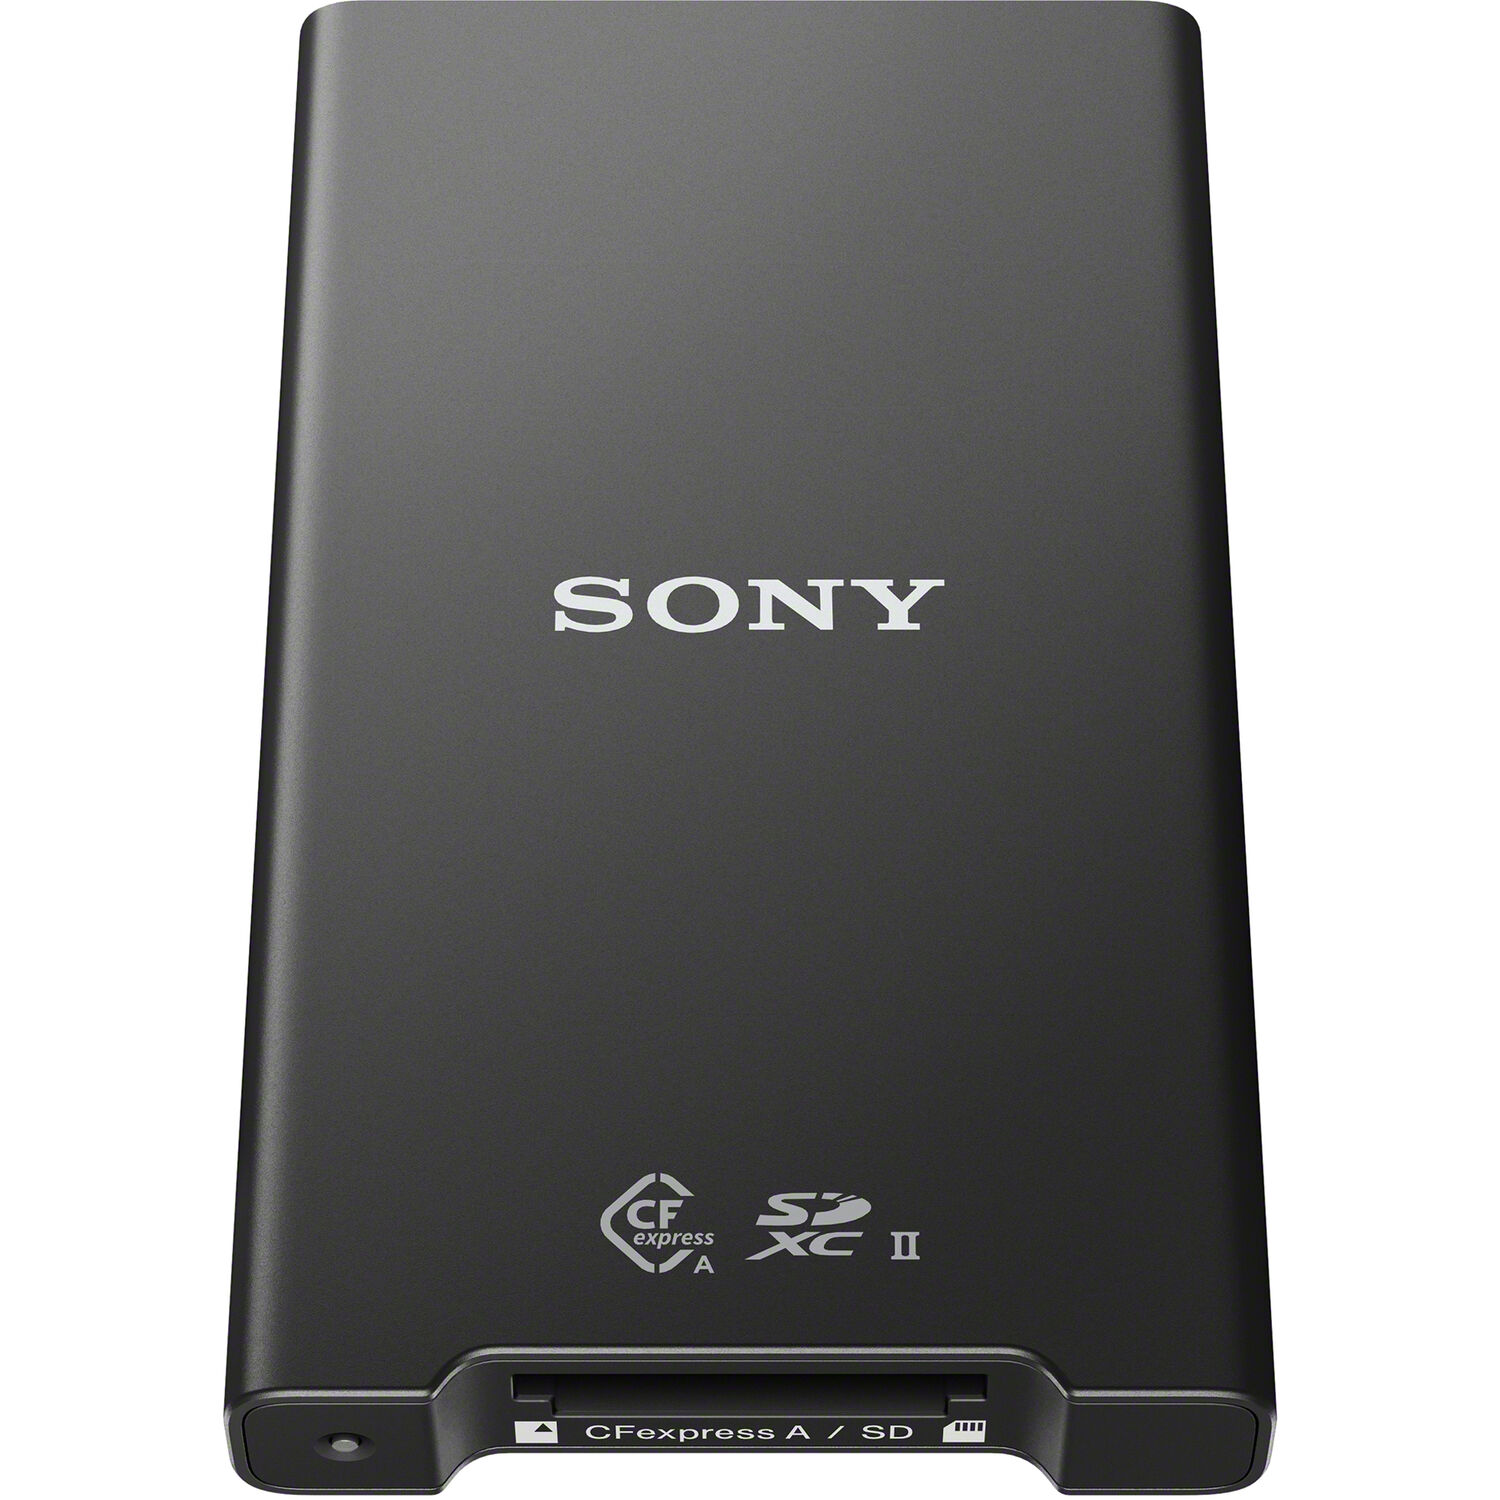 Sony MRW-G2 CFexpress Type A / SD card reader